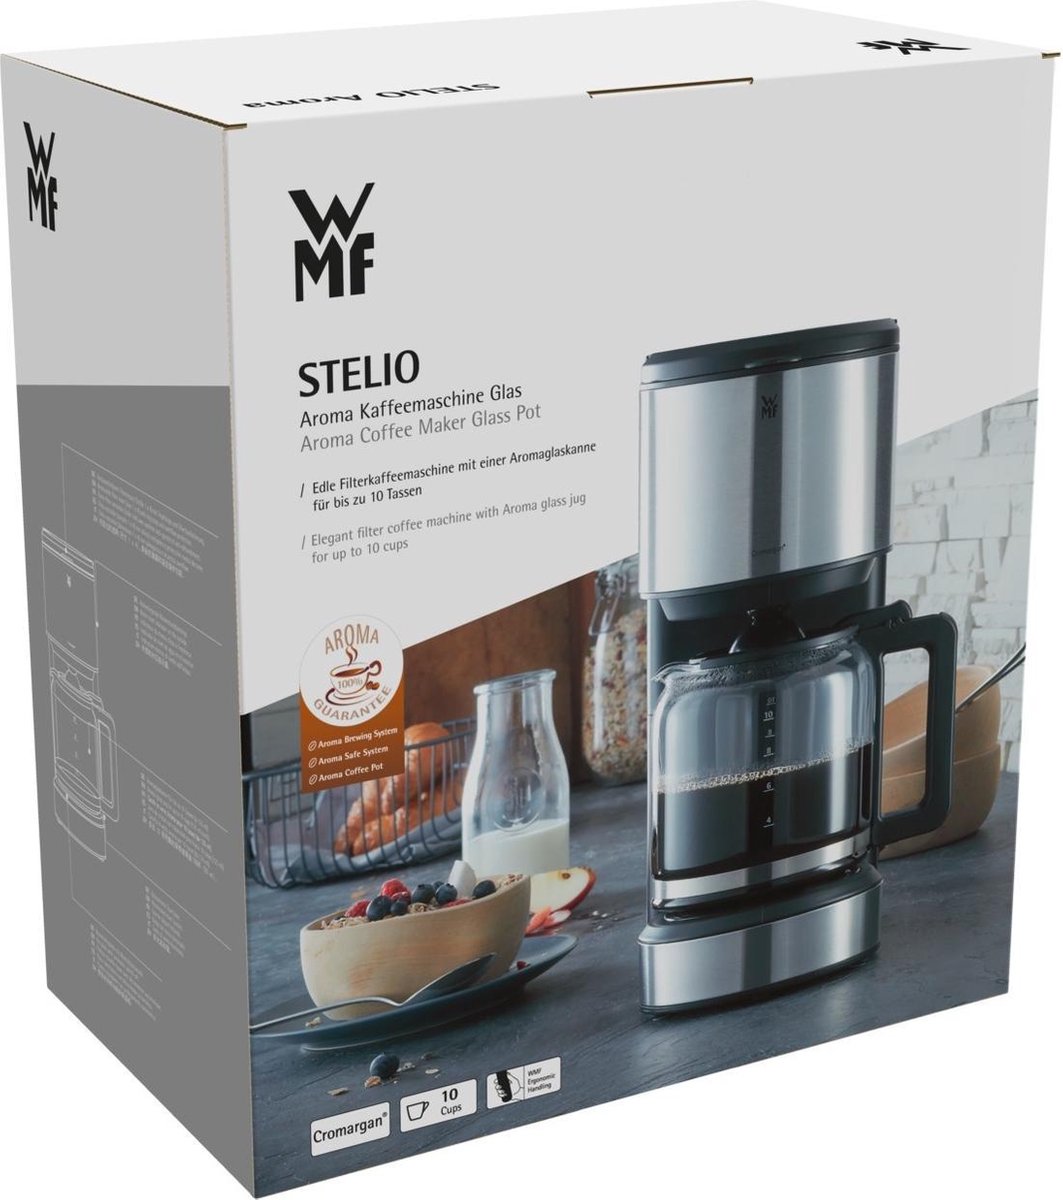 WMF Stelio - Koffiezetapparaat met glazen kan | bol